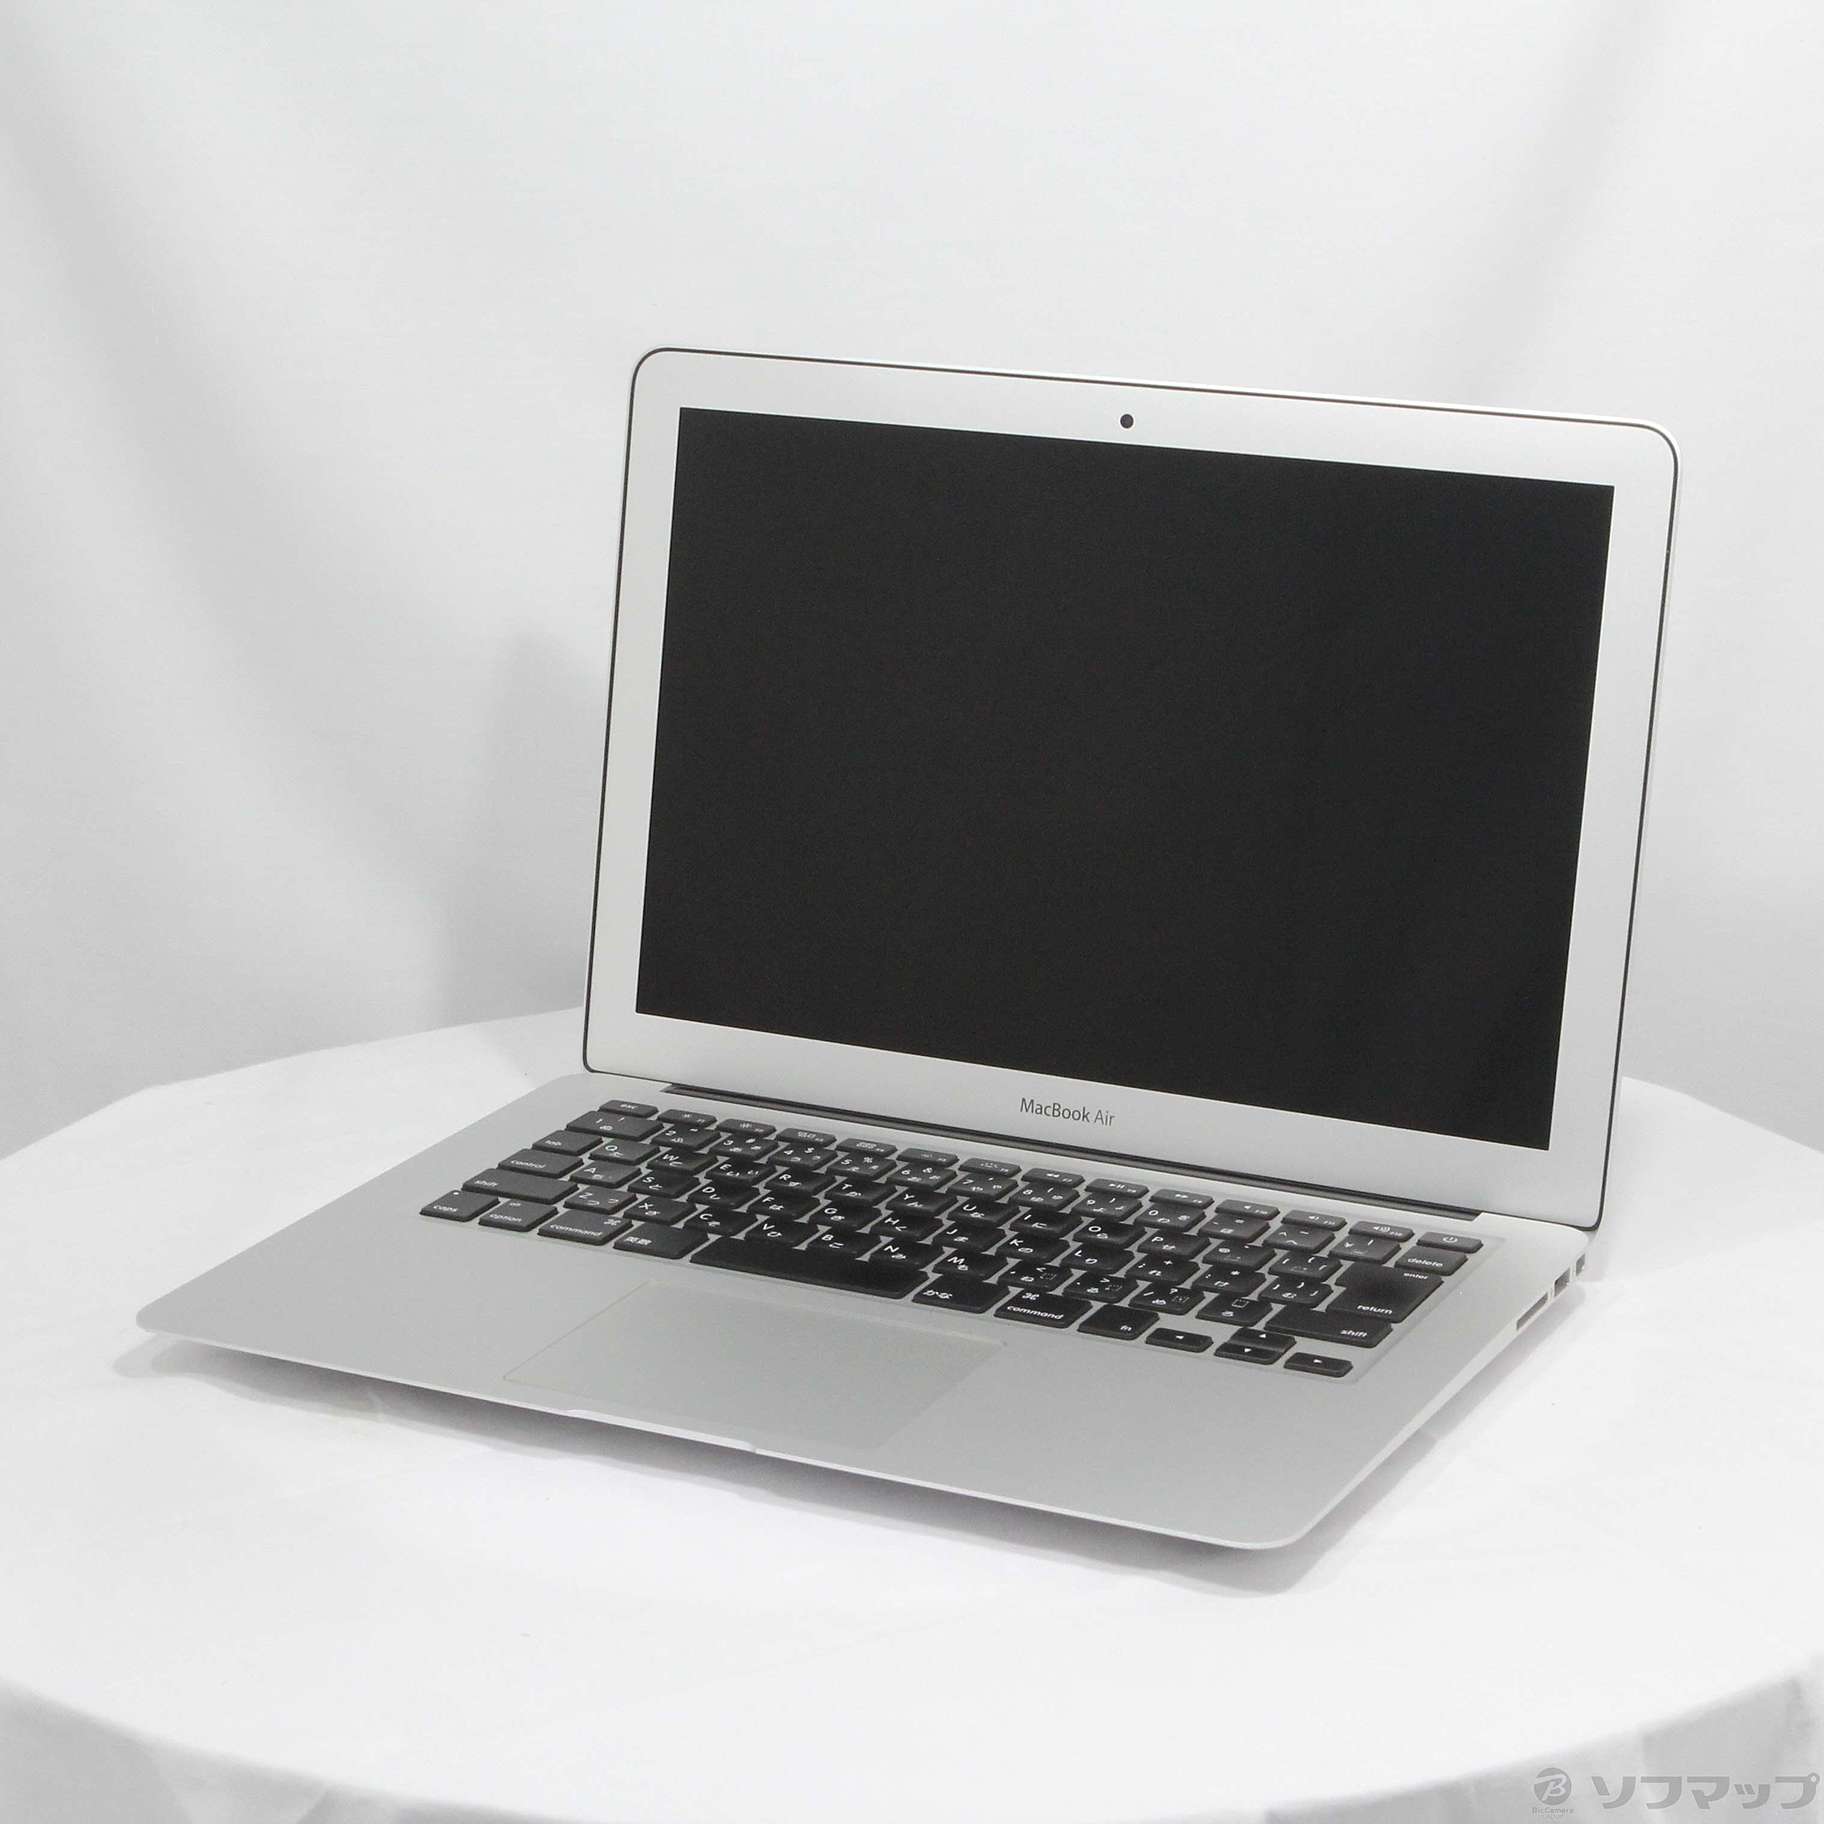 中古品〕 MacBook Air 13.3-inch Mid 2012 MD231J／A Core_i5 1.8GHz